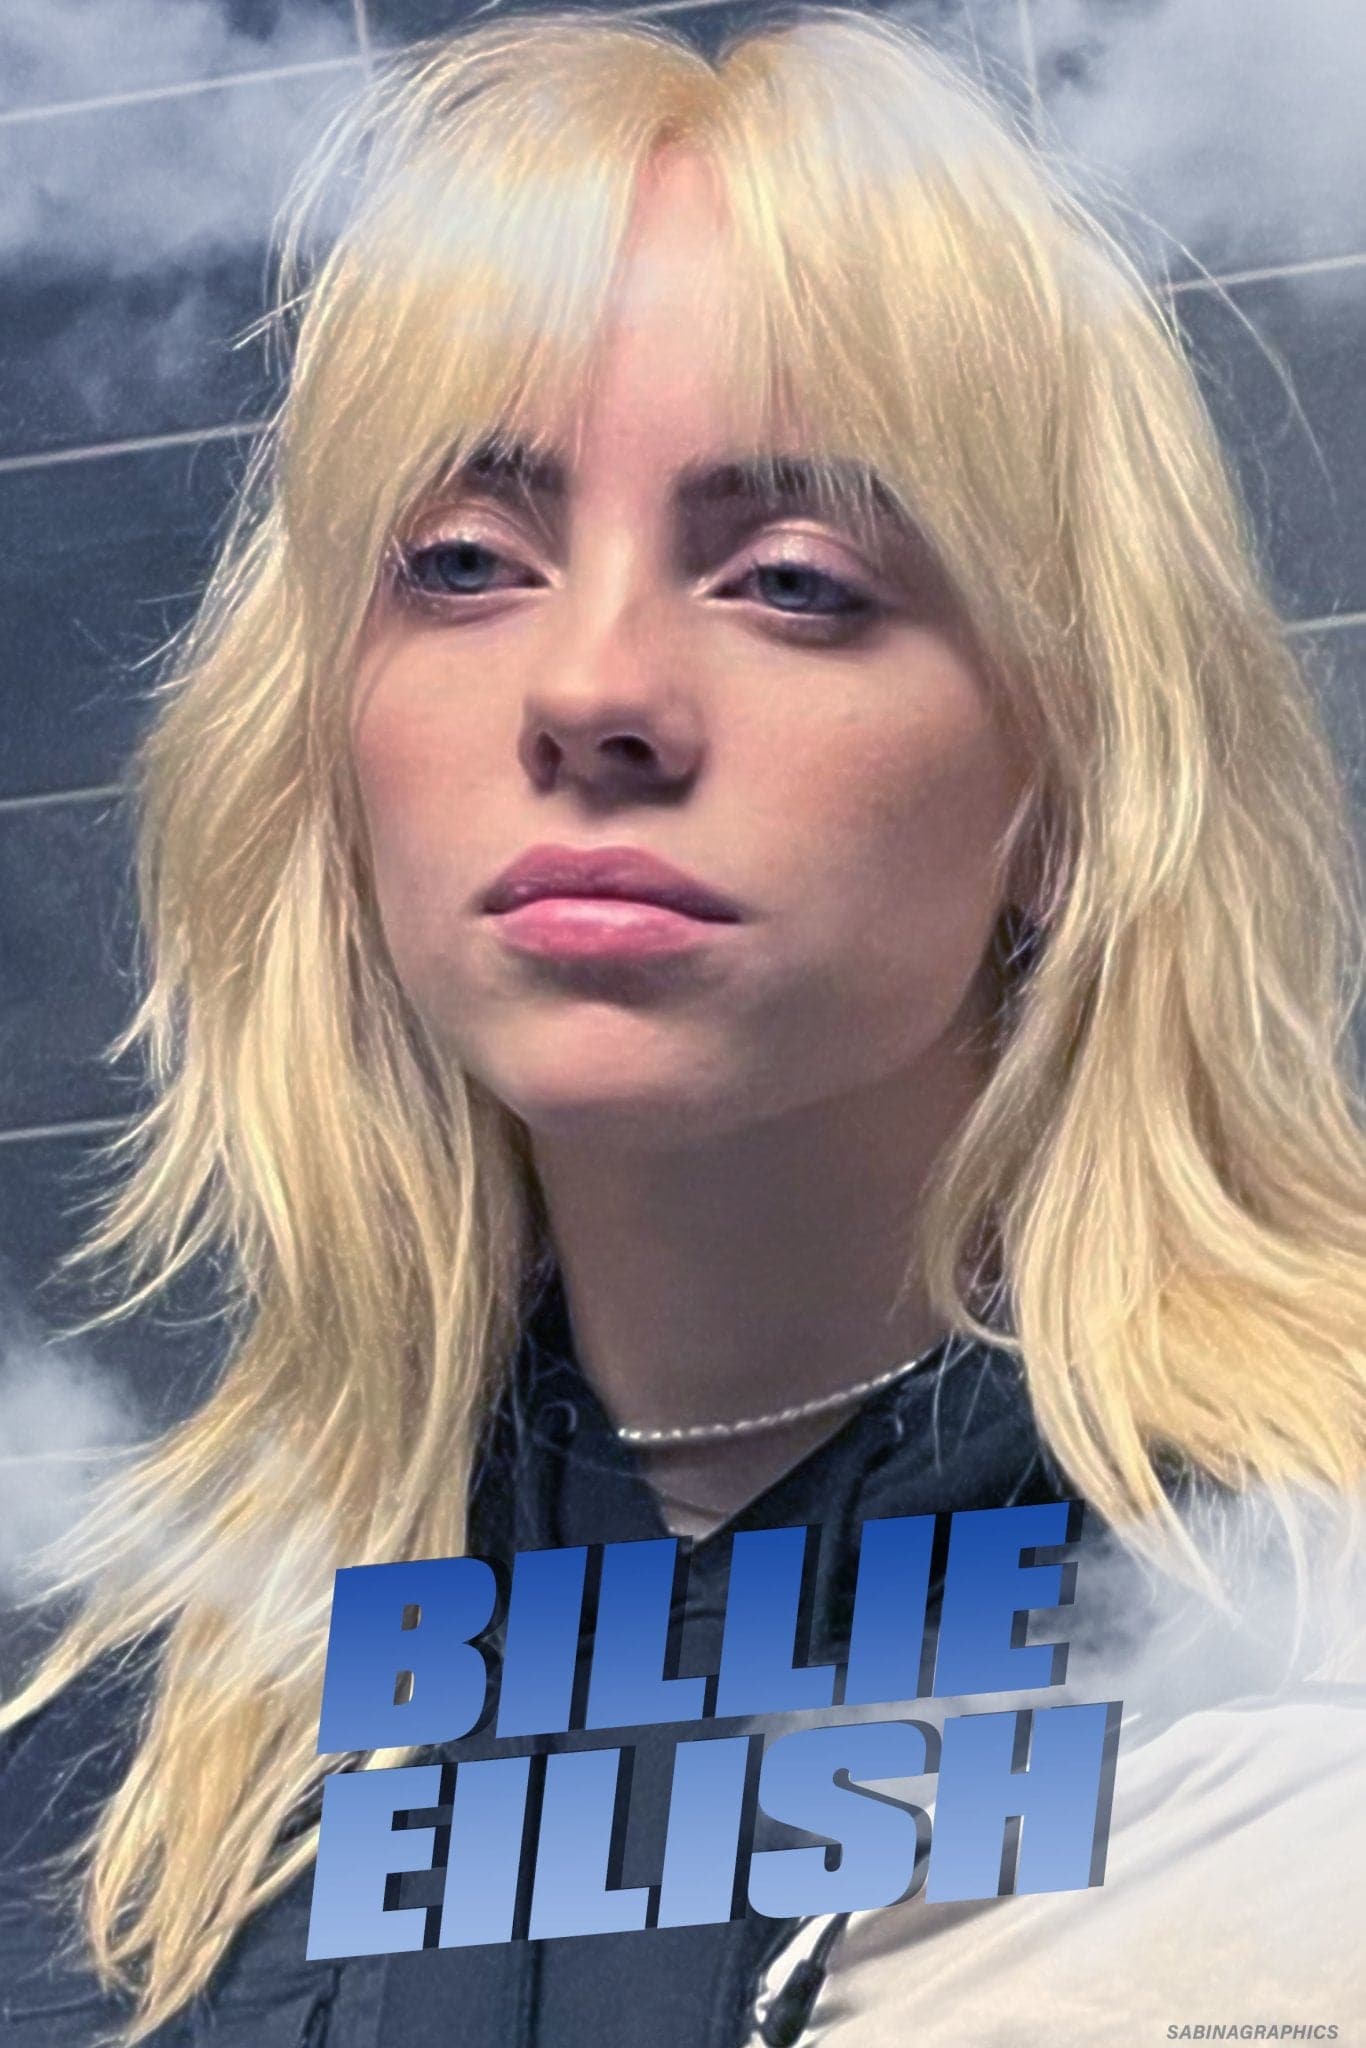 Billie Eilish 'When We Fall Asleep Where Do We Go' Poster – Posters Plug